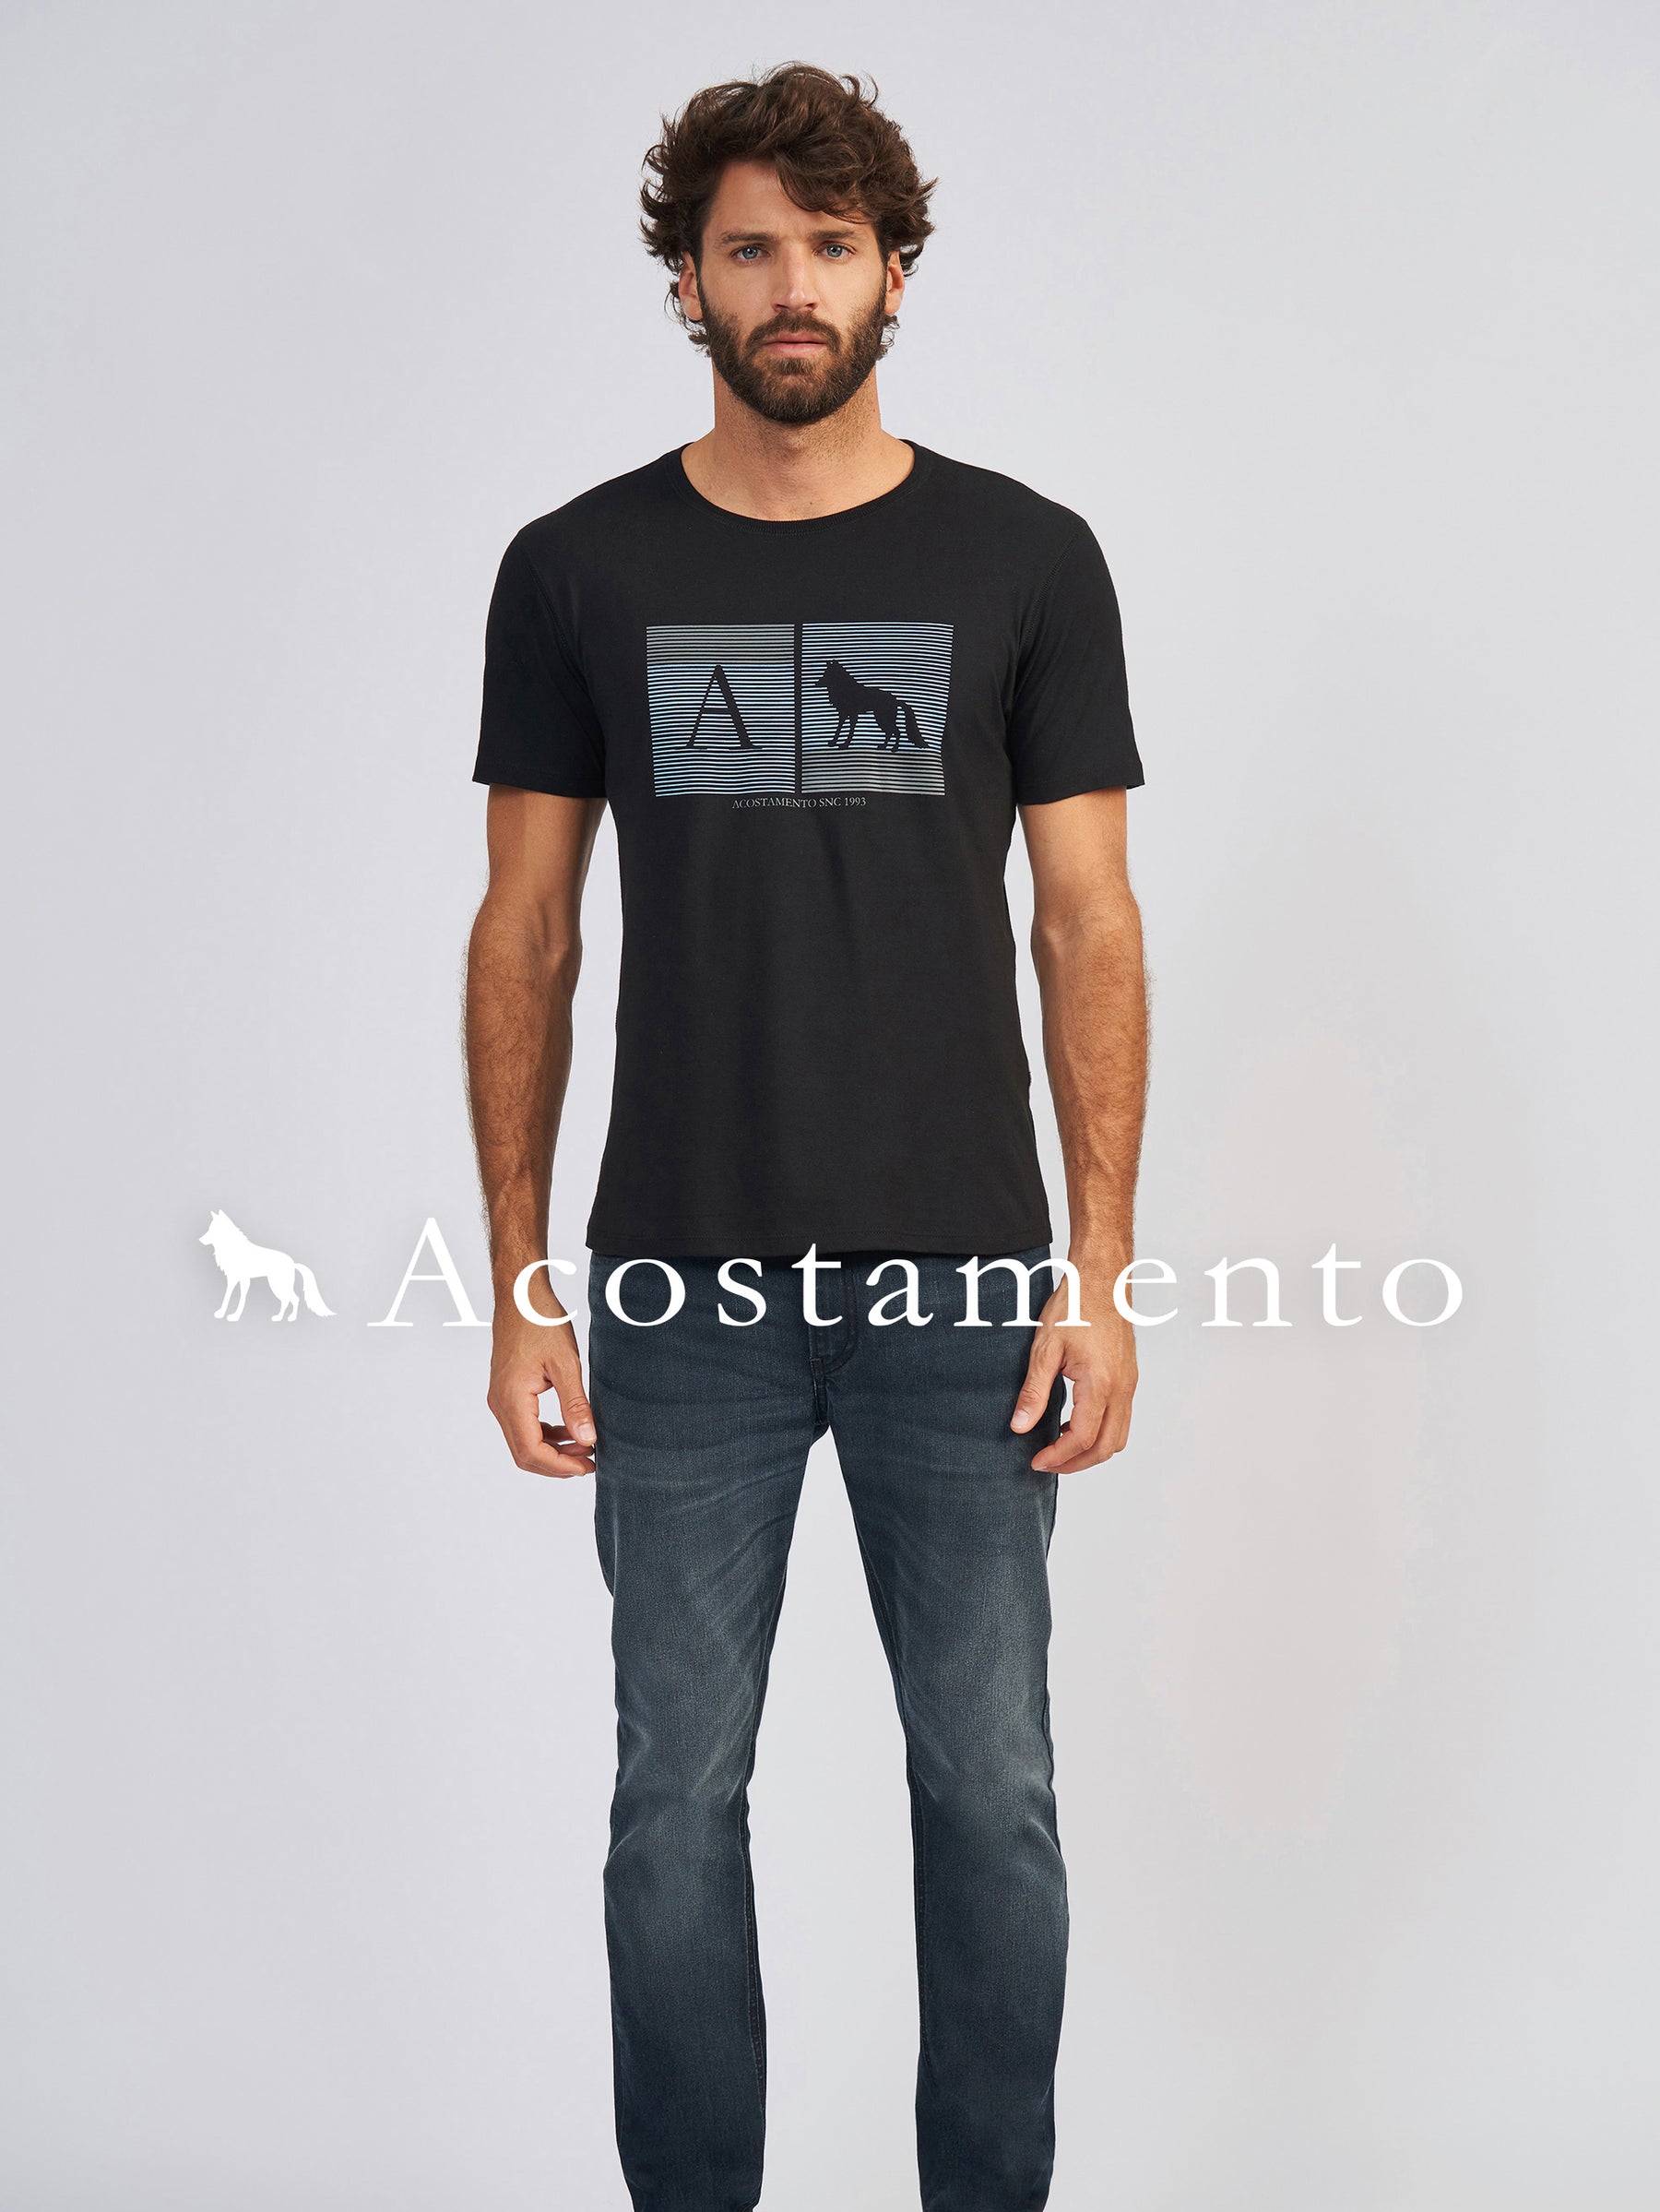 Camiseta Carpi Acostamento - Hellik Store